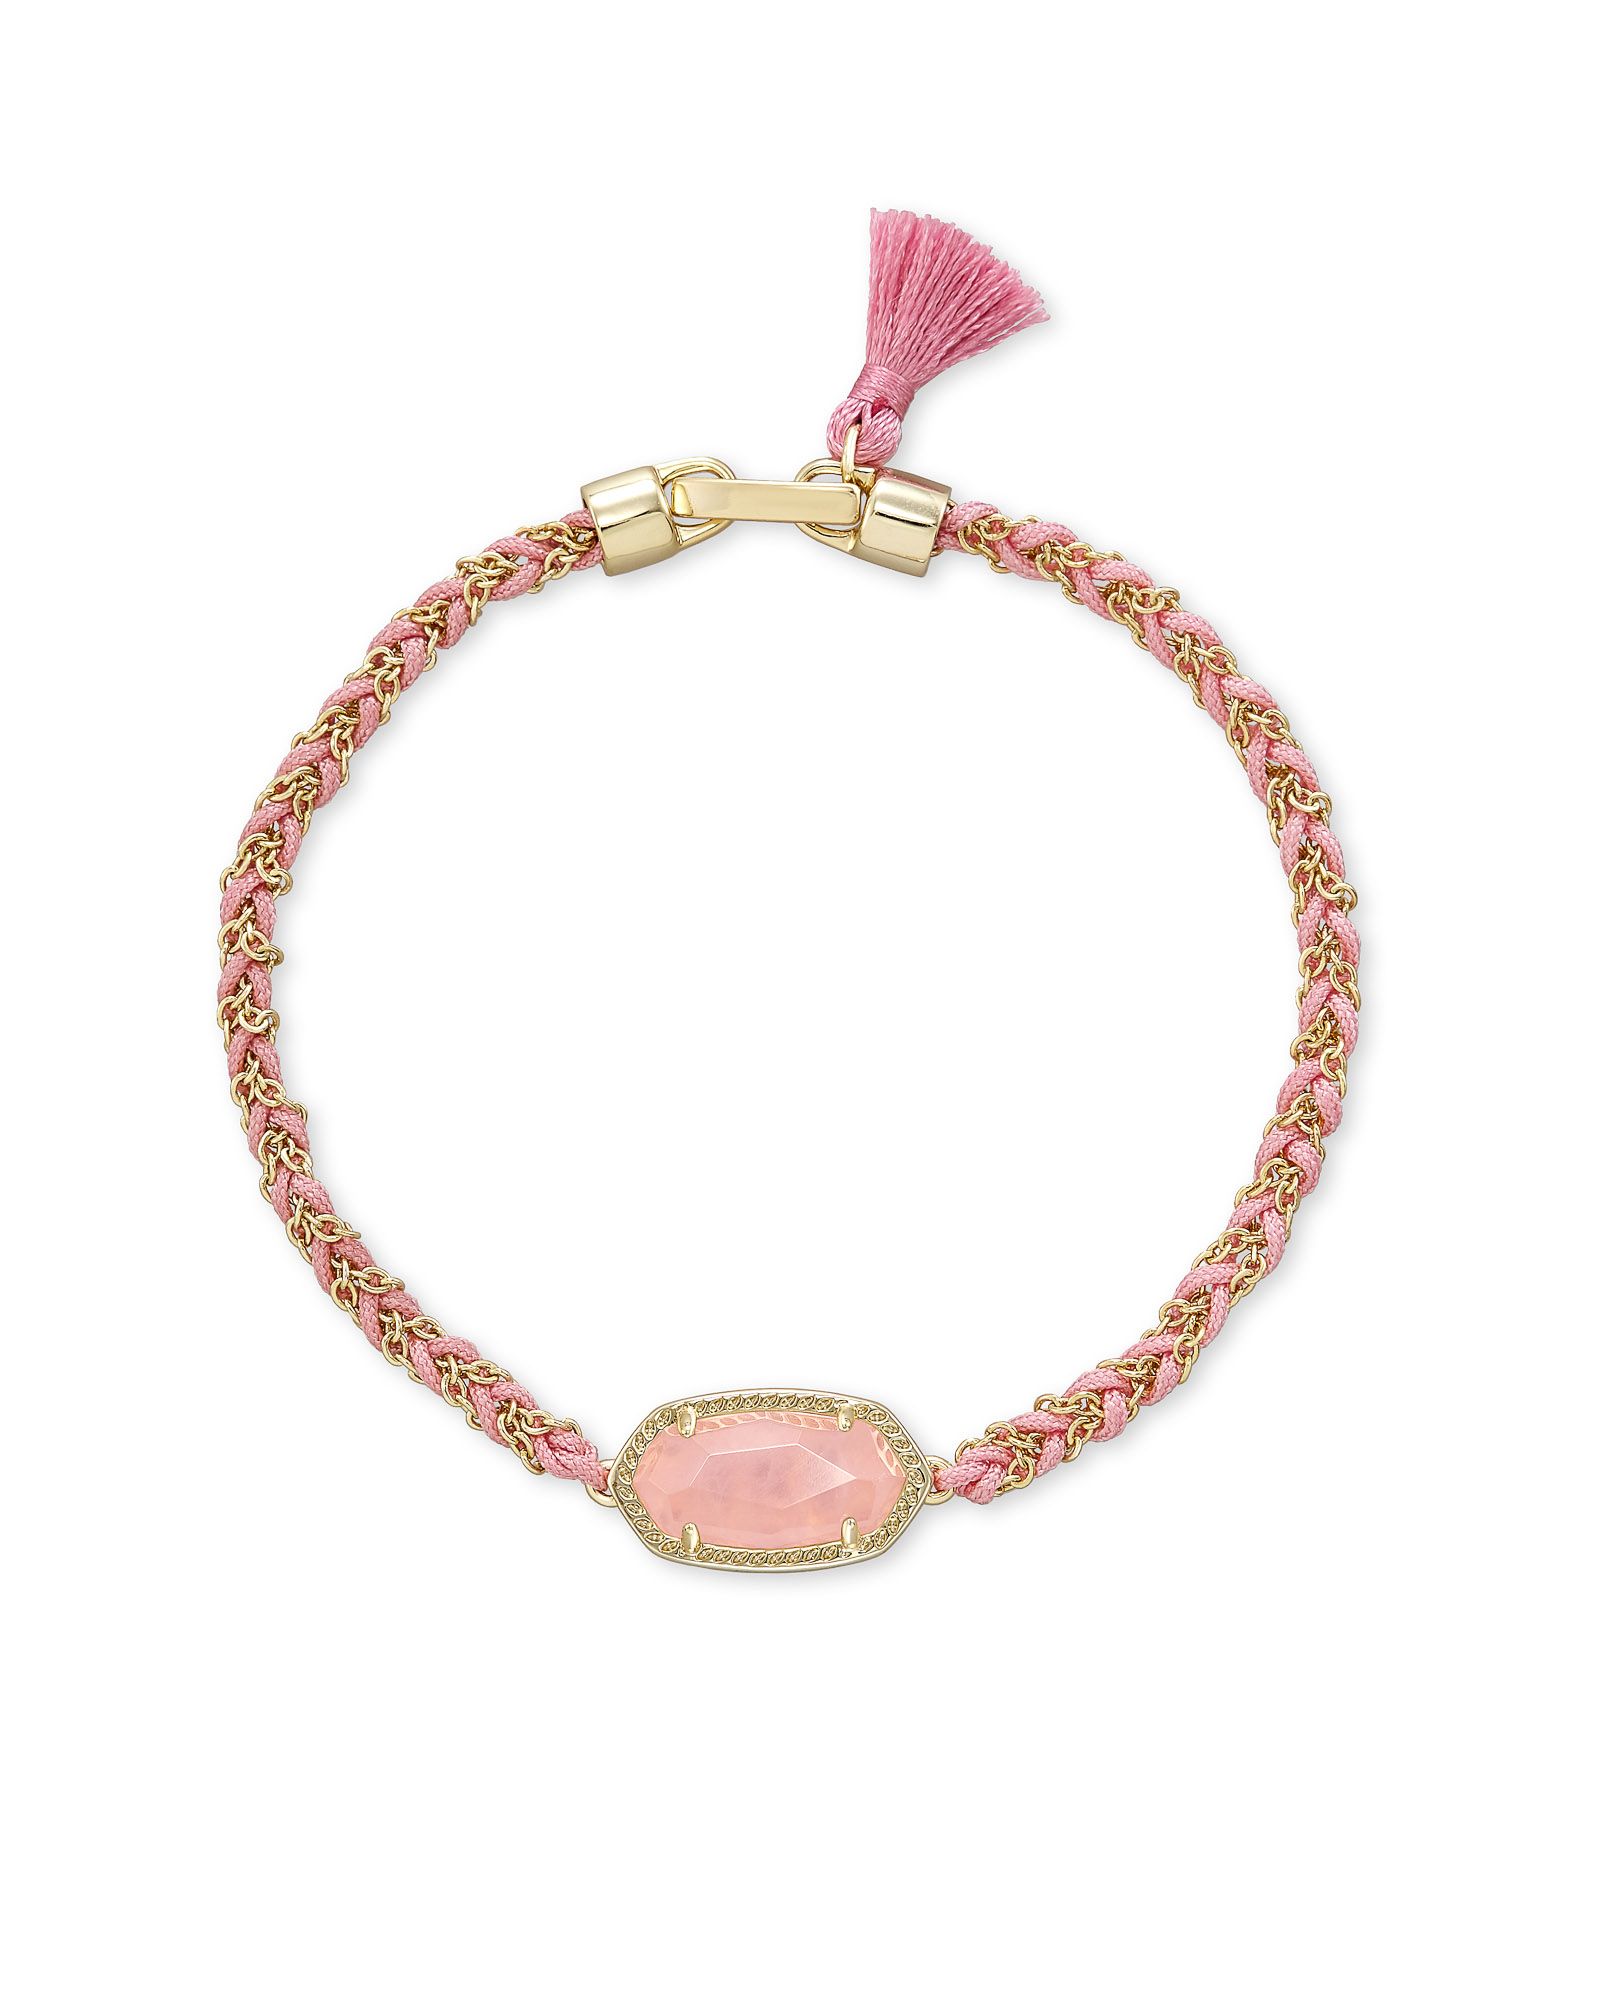 Elaina Gold Friendship Bracelet in Rose Quartz | Kendra Scott | Kendra Scott